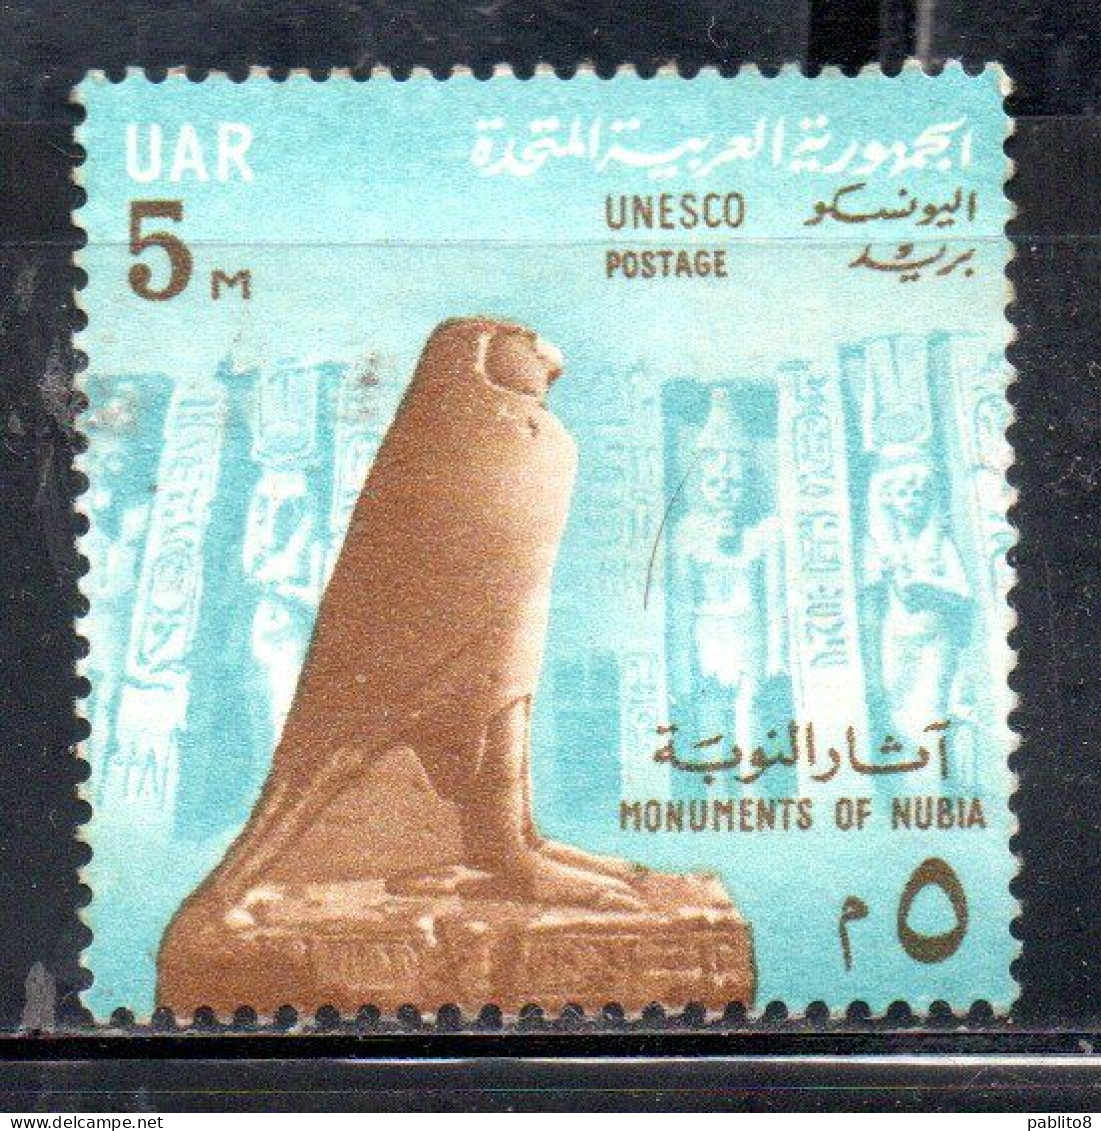 UAR EGYPT EGITTO 1964 SAVE THE MONUMENTS OF NUBIA CAMPAIGN HORUS AND FACADE OF NEFERTARI TEMPLE ABU SIMBEL 5m MH - Neufs